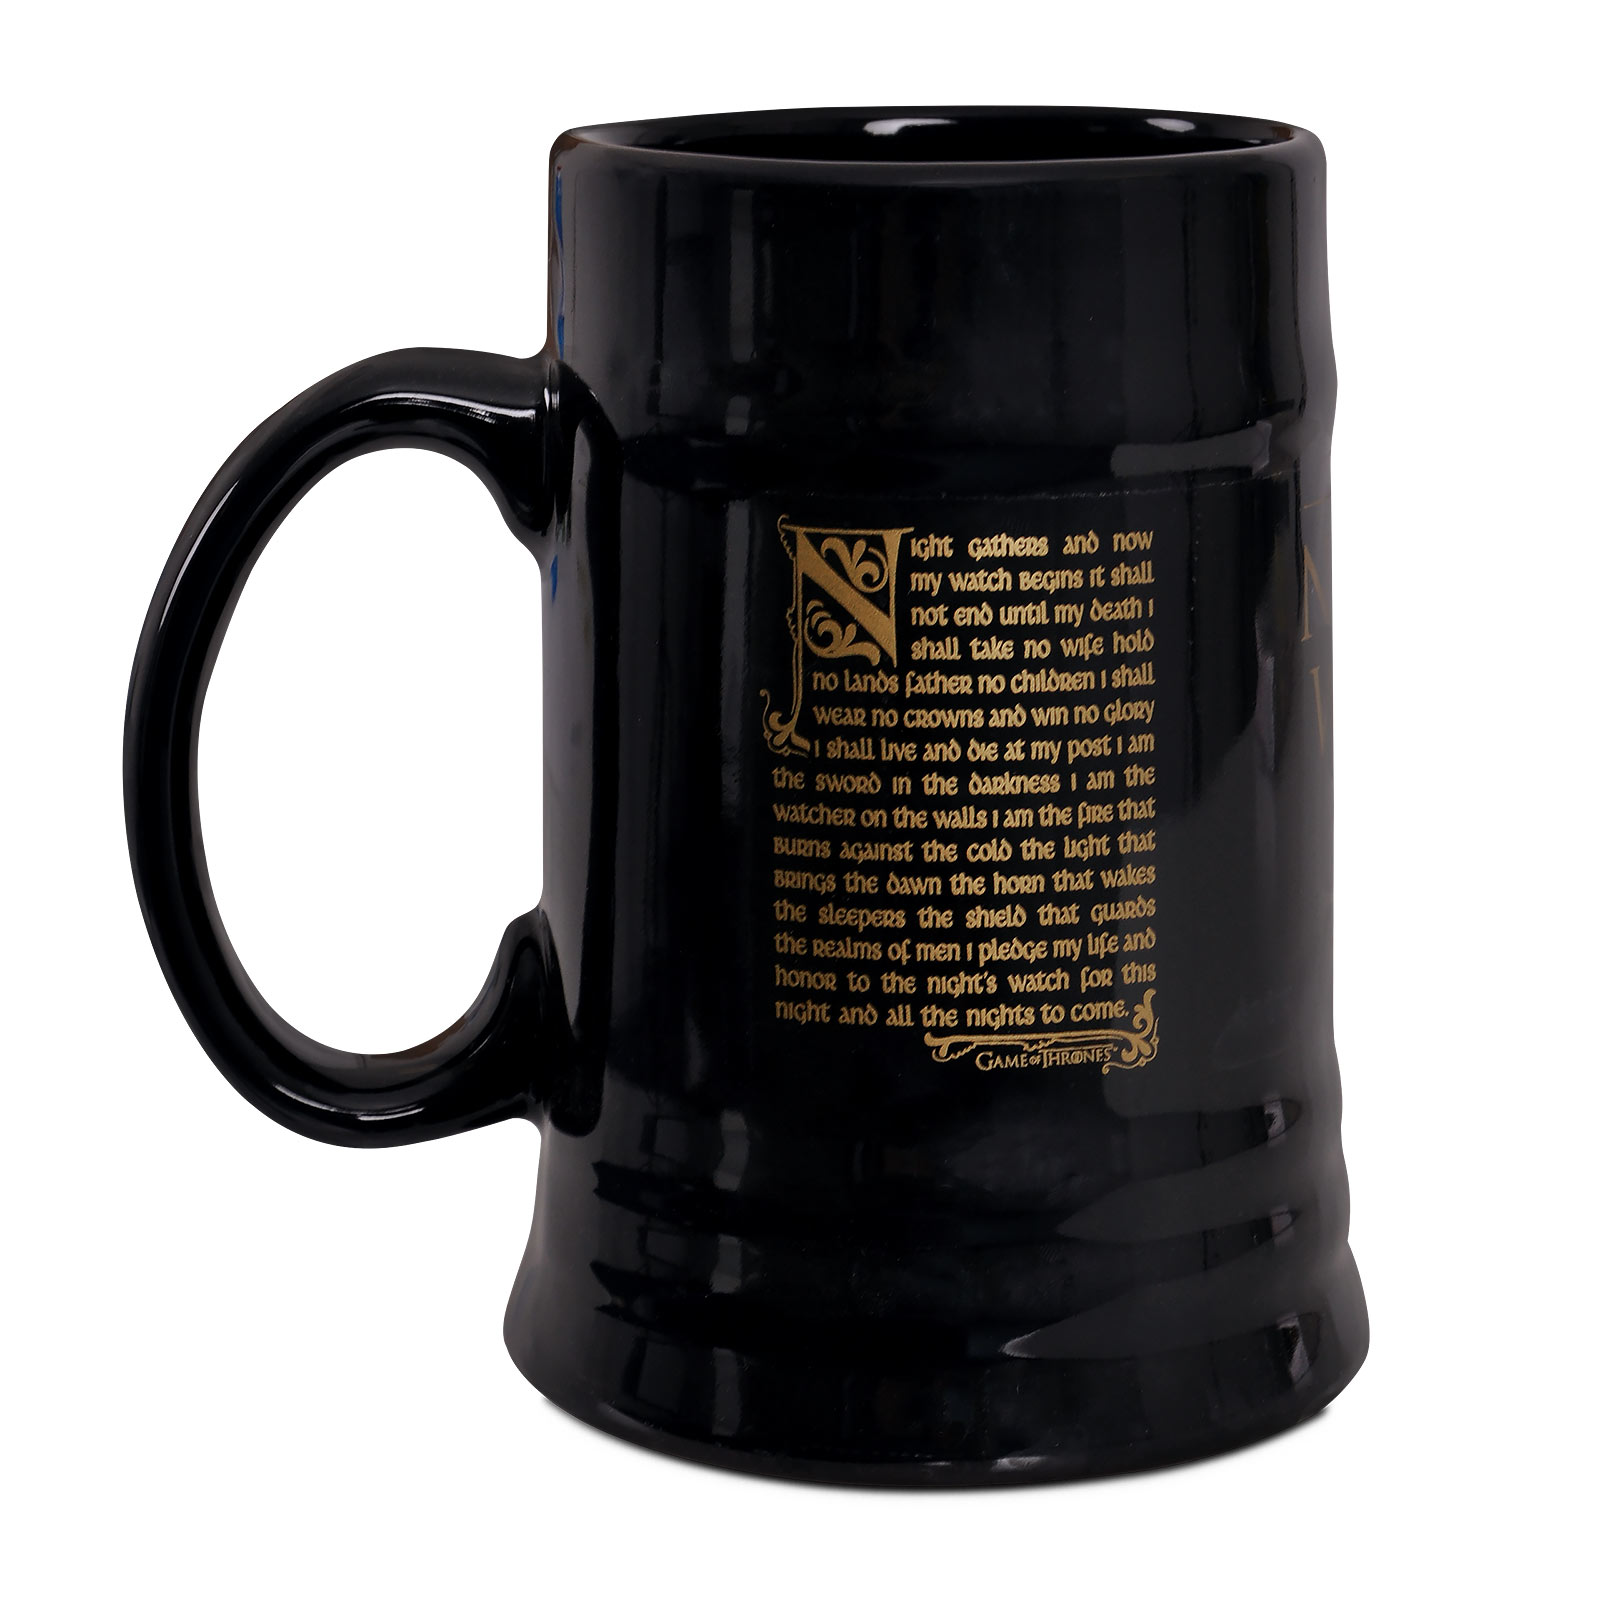 Game of Thrones - Mug noir Serment de la Garde de Nuit